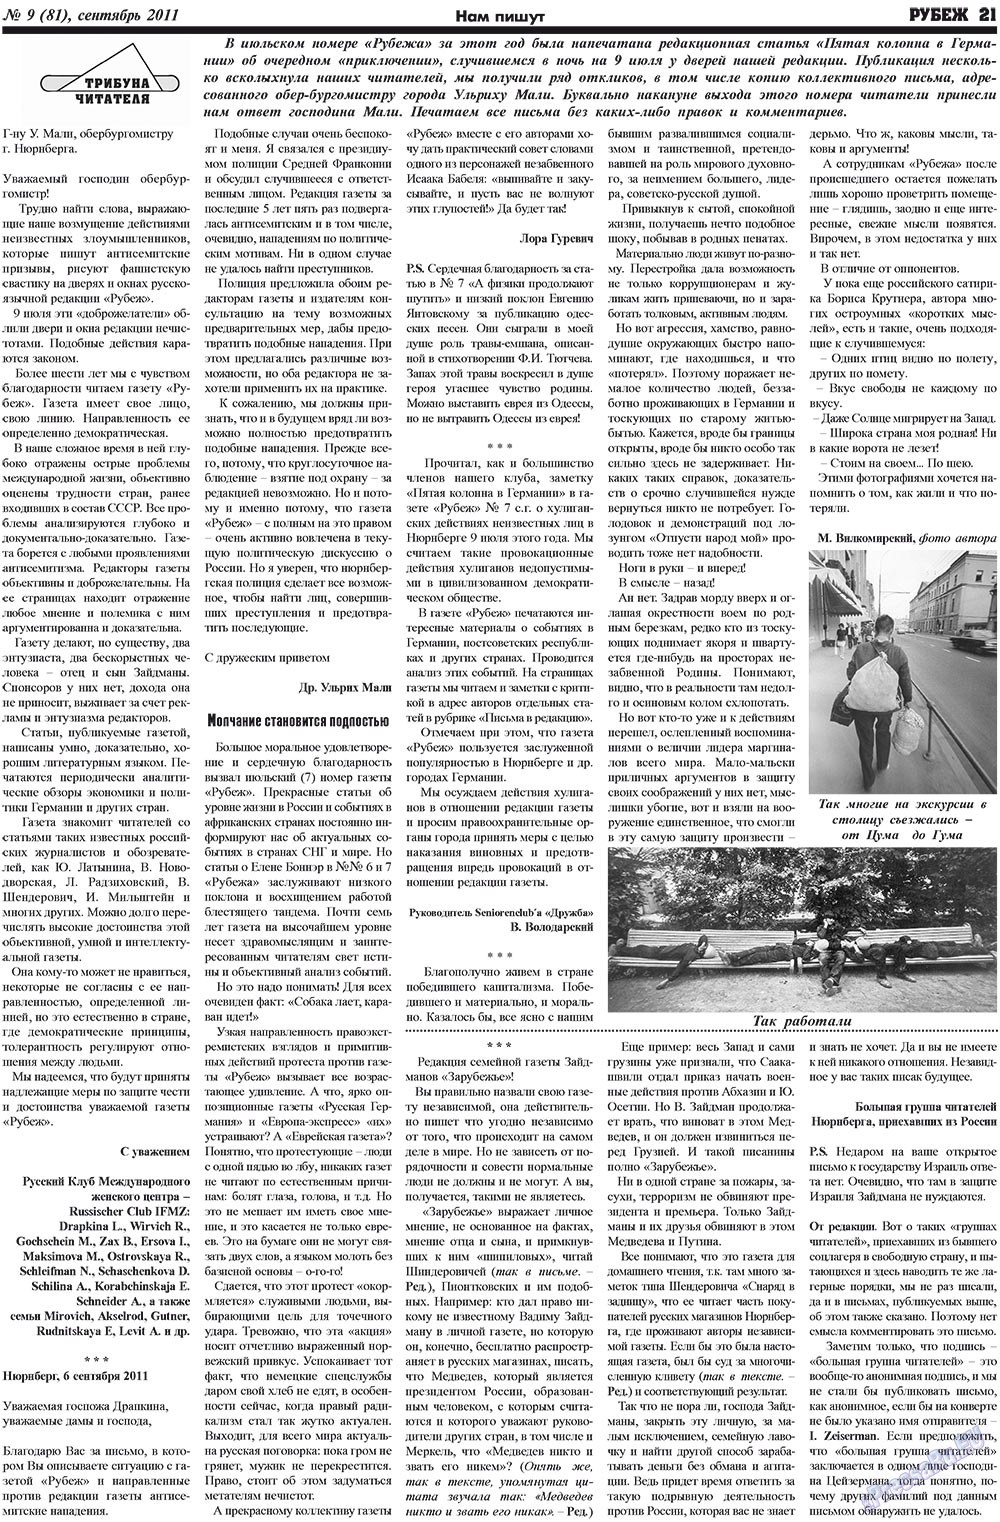 Рубеж, газета. 2011 №9 стр.21